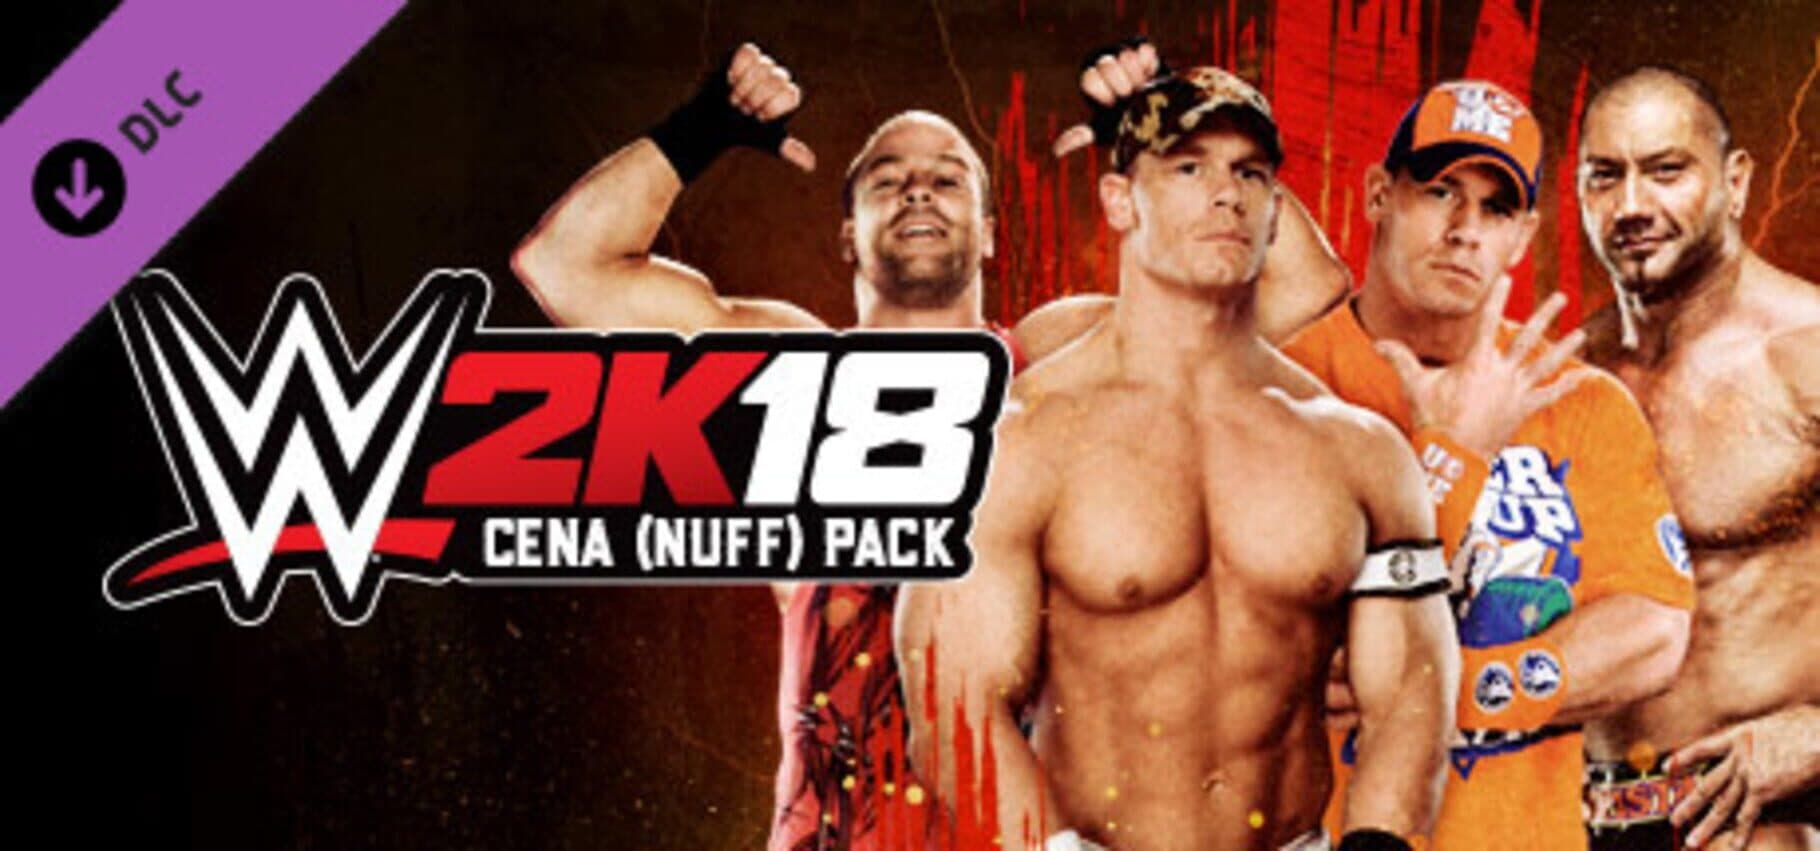 WWE 2K18: Cena (Nuff) Pack cover art